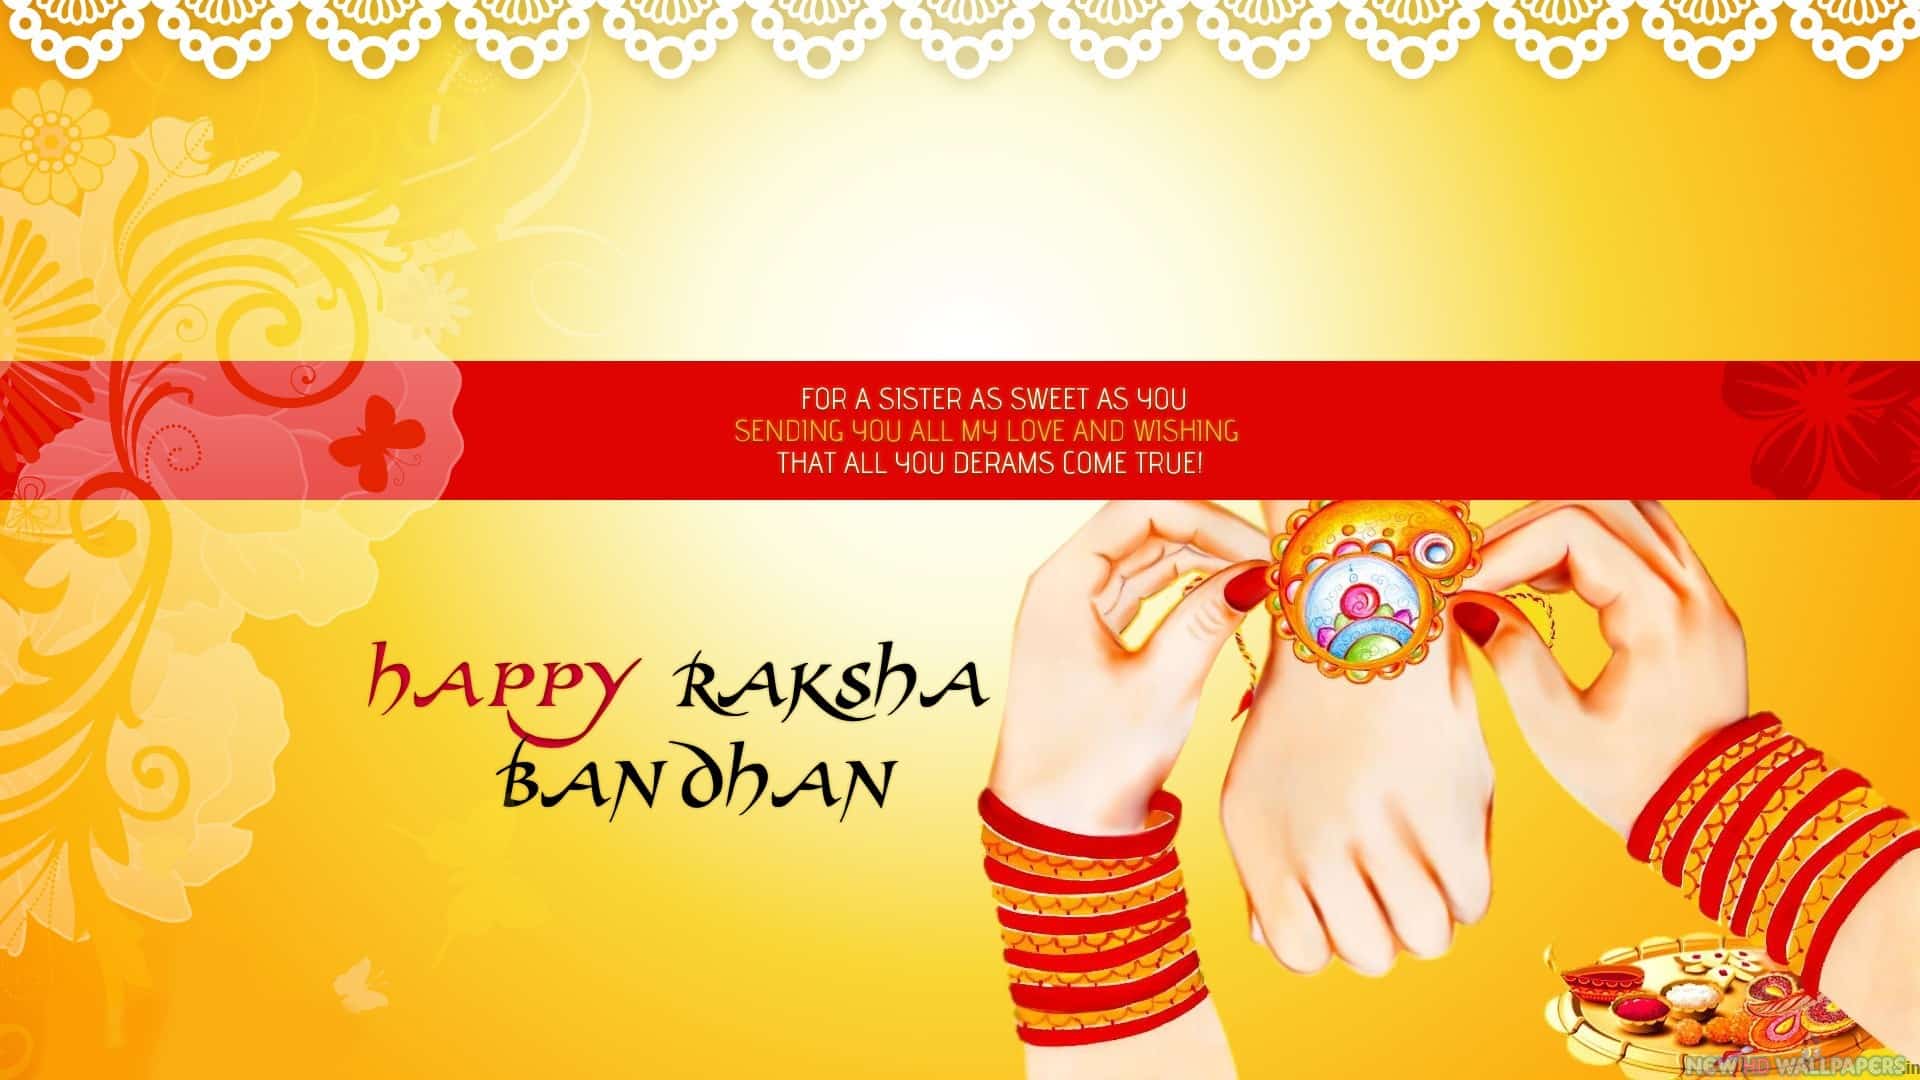 Happy Raksha Bandhan 2019: Messages Quotes Image in HD Free